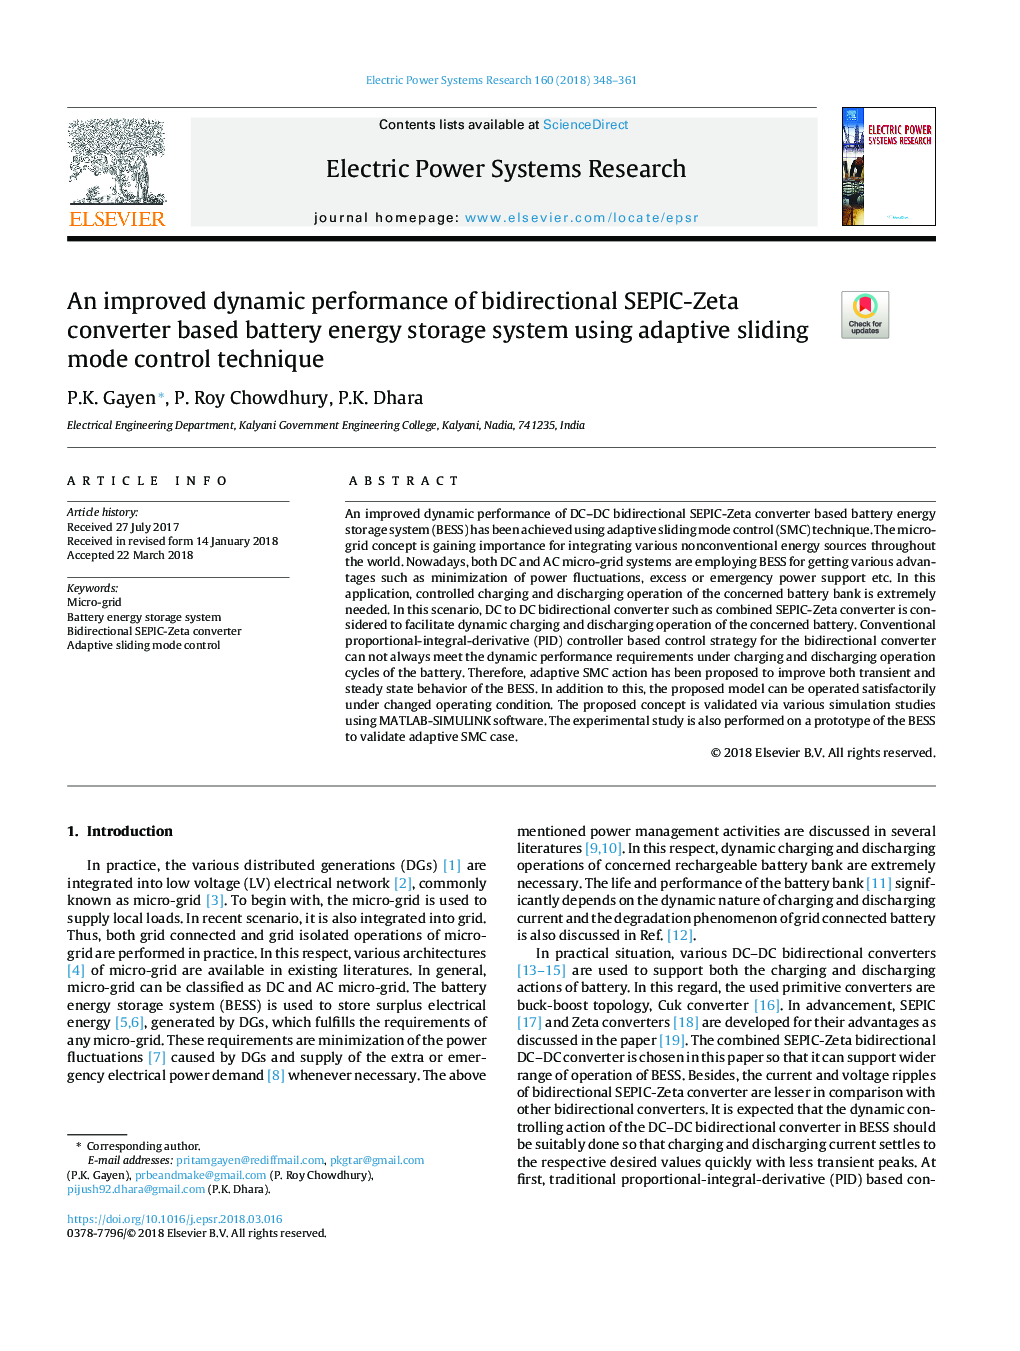 An improved dynamic performance of bidirectional SEPIC-Zeta converter based battery energy storage system using adaptive sliding mode control technique